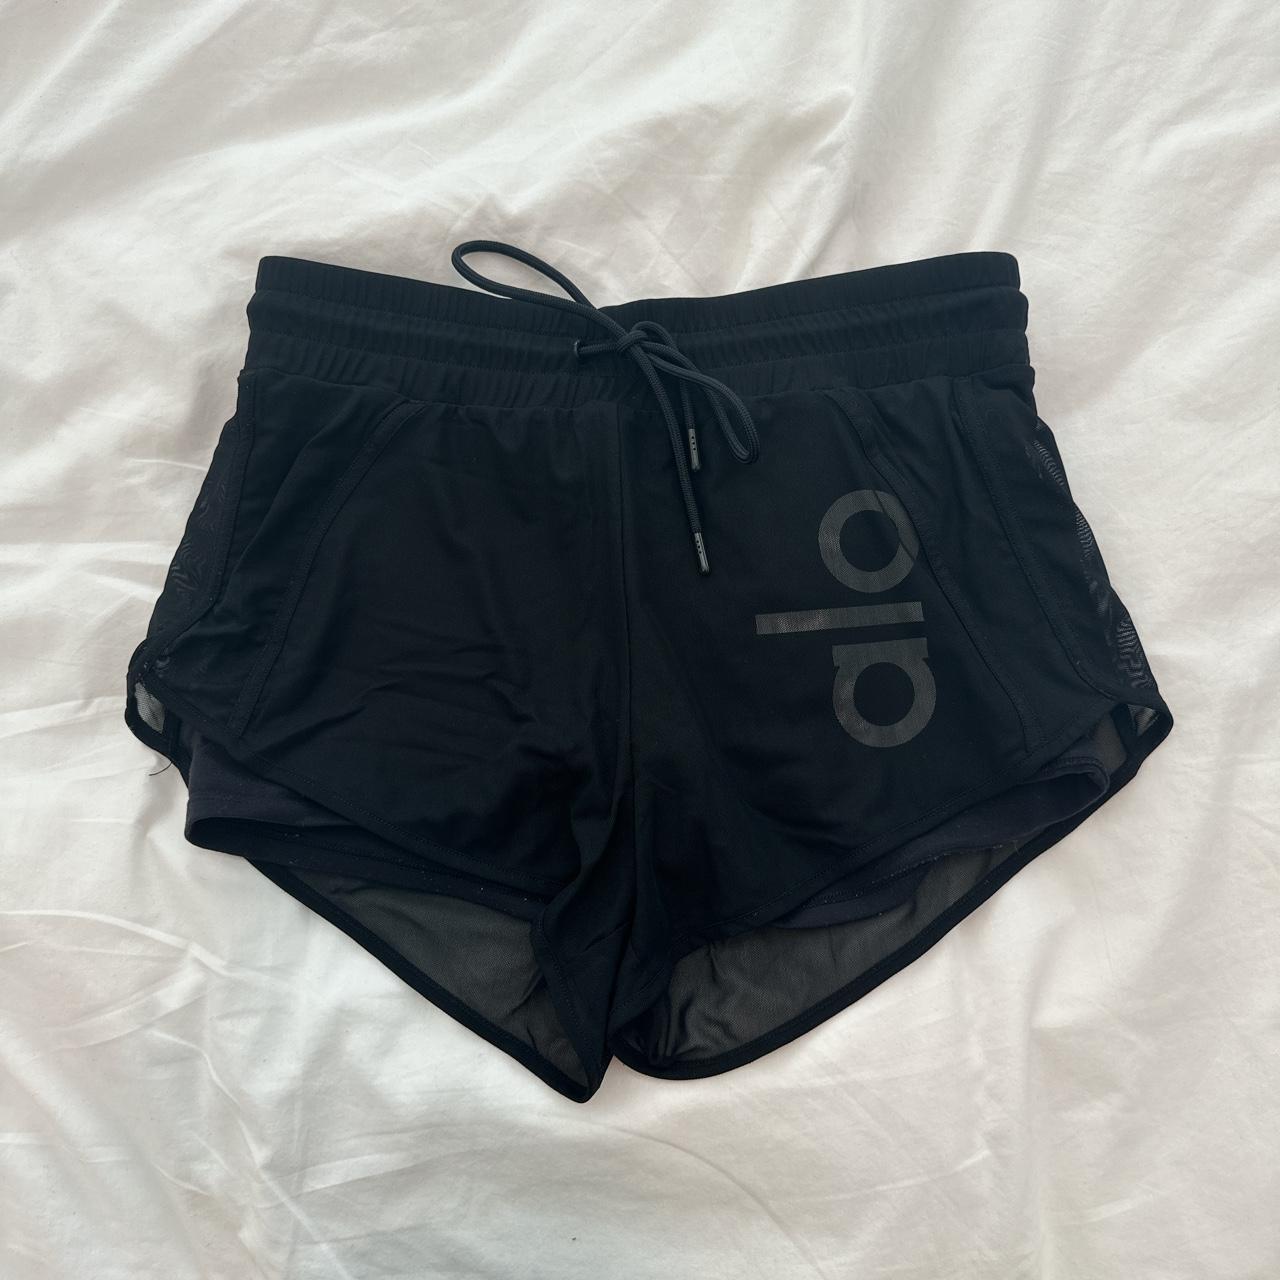 Alosoft aura short biker shorts super cute size L - - Depop